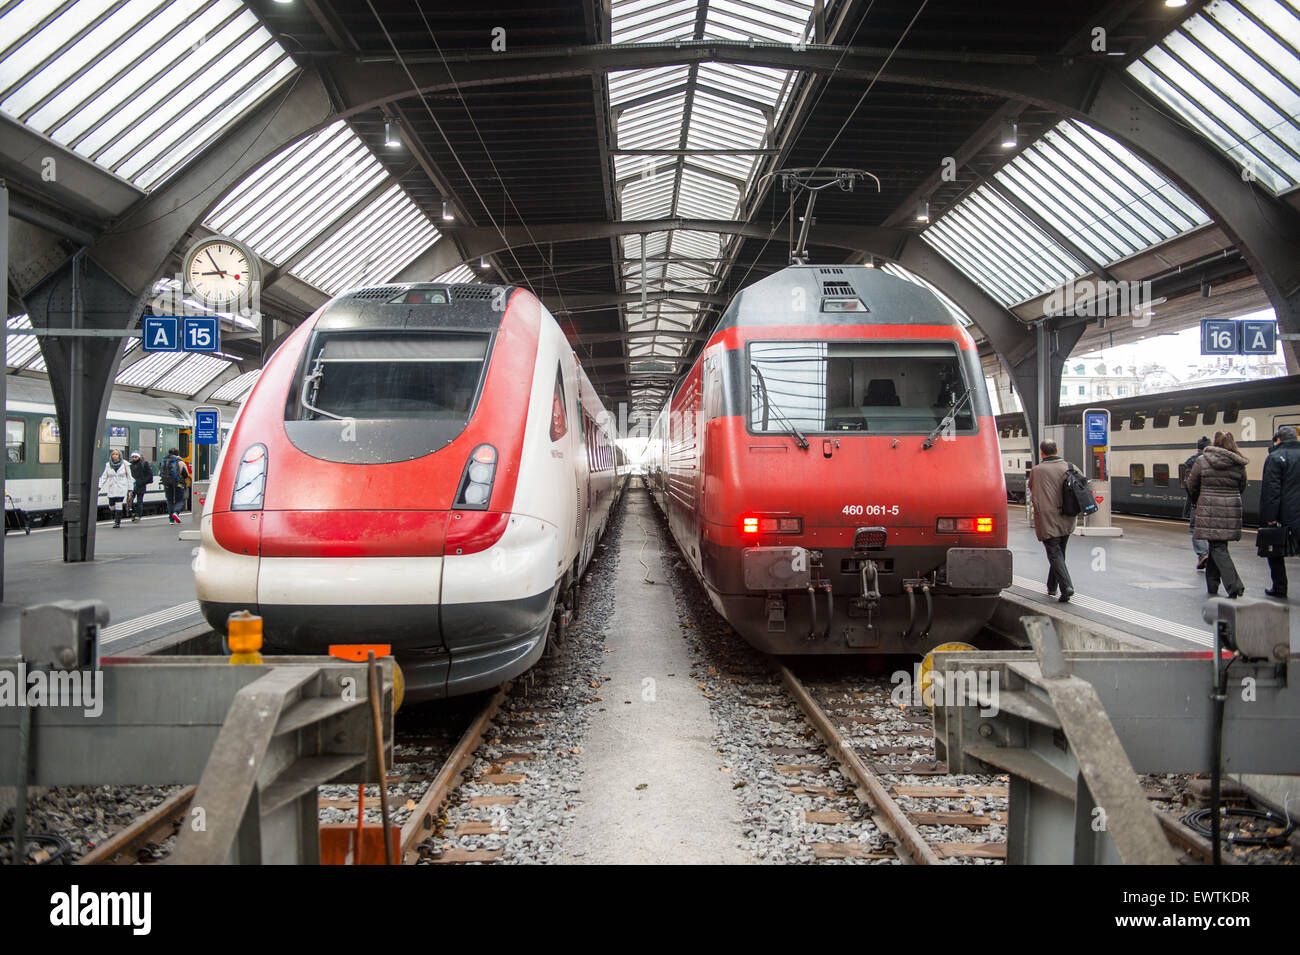 Trains at the train station in Zurich Switzerland, Europe Stock Photo